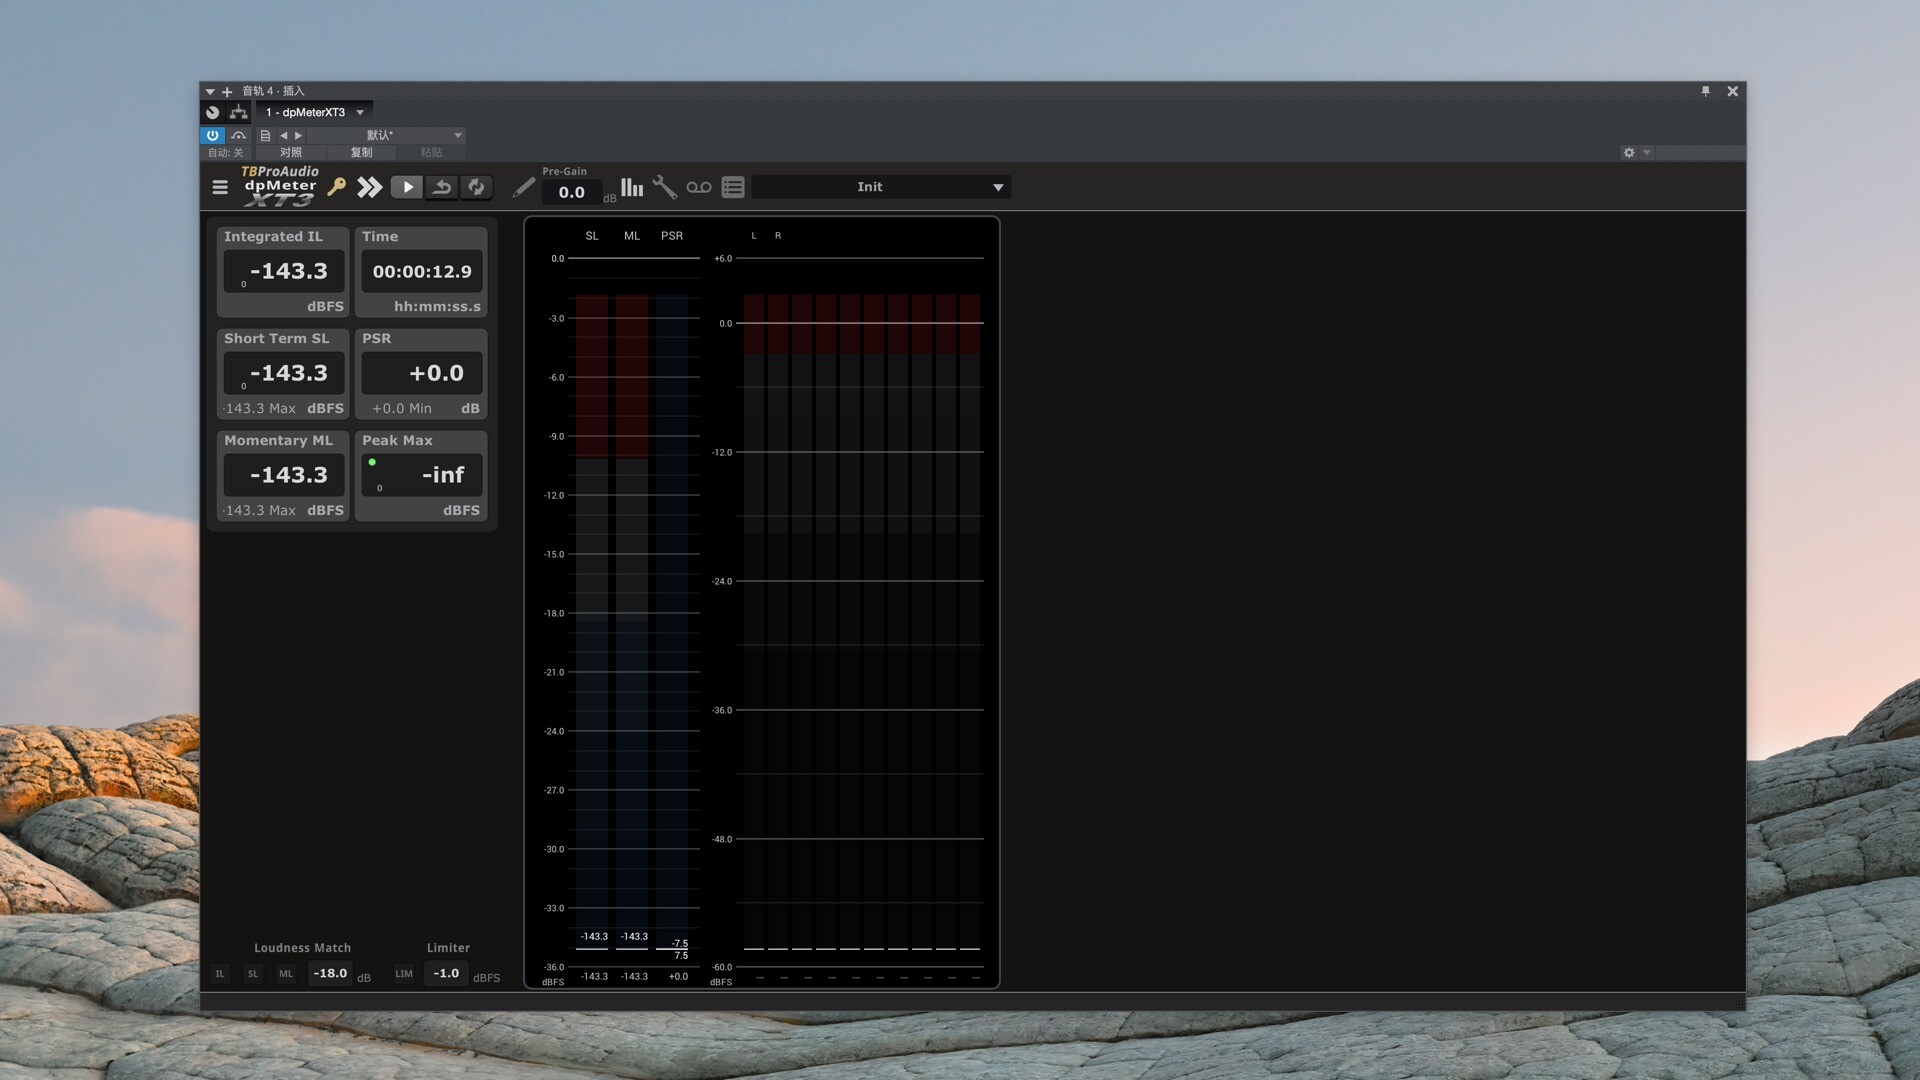 TBProAudio dpMeterXT2 for Mac(响度标准数据测量插件)